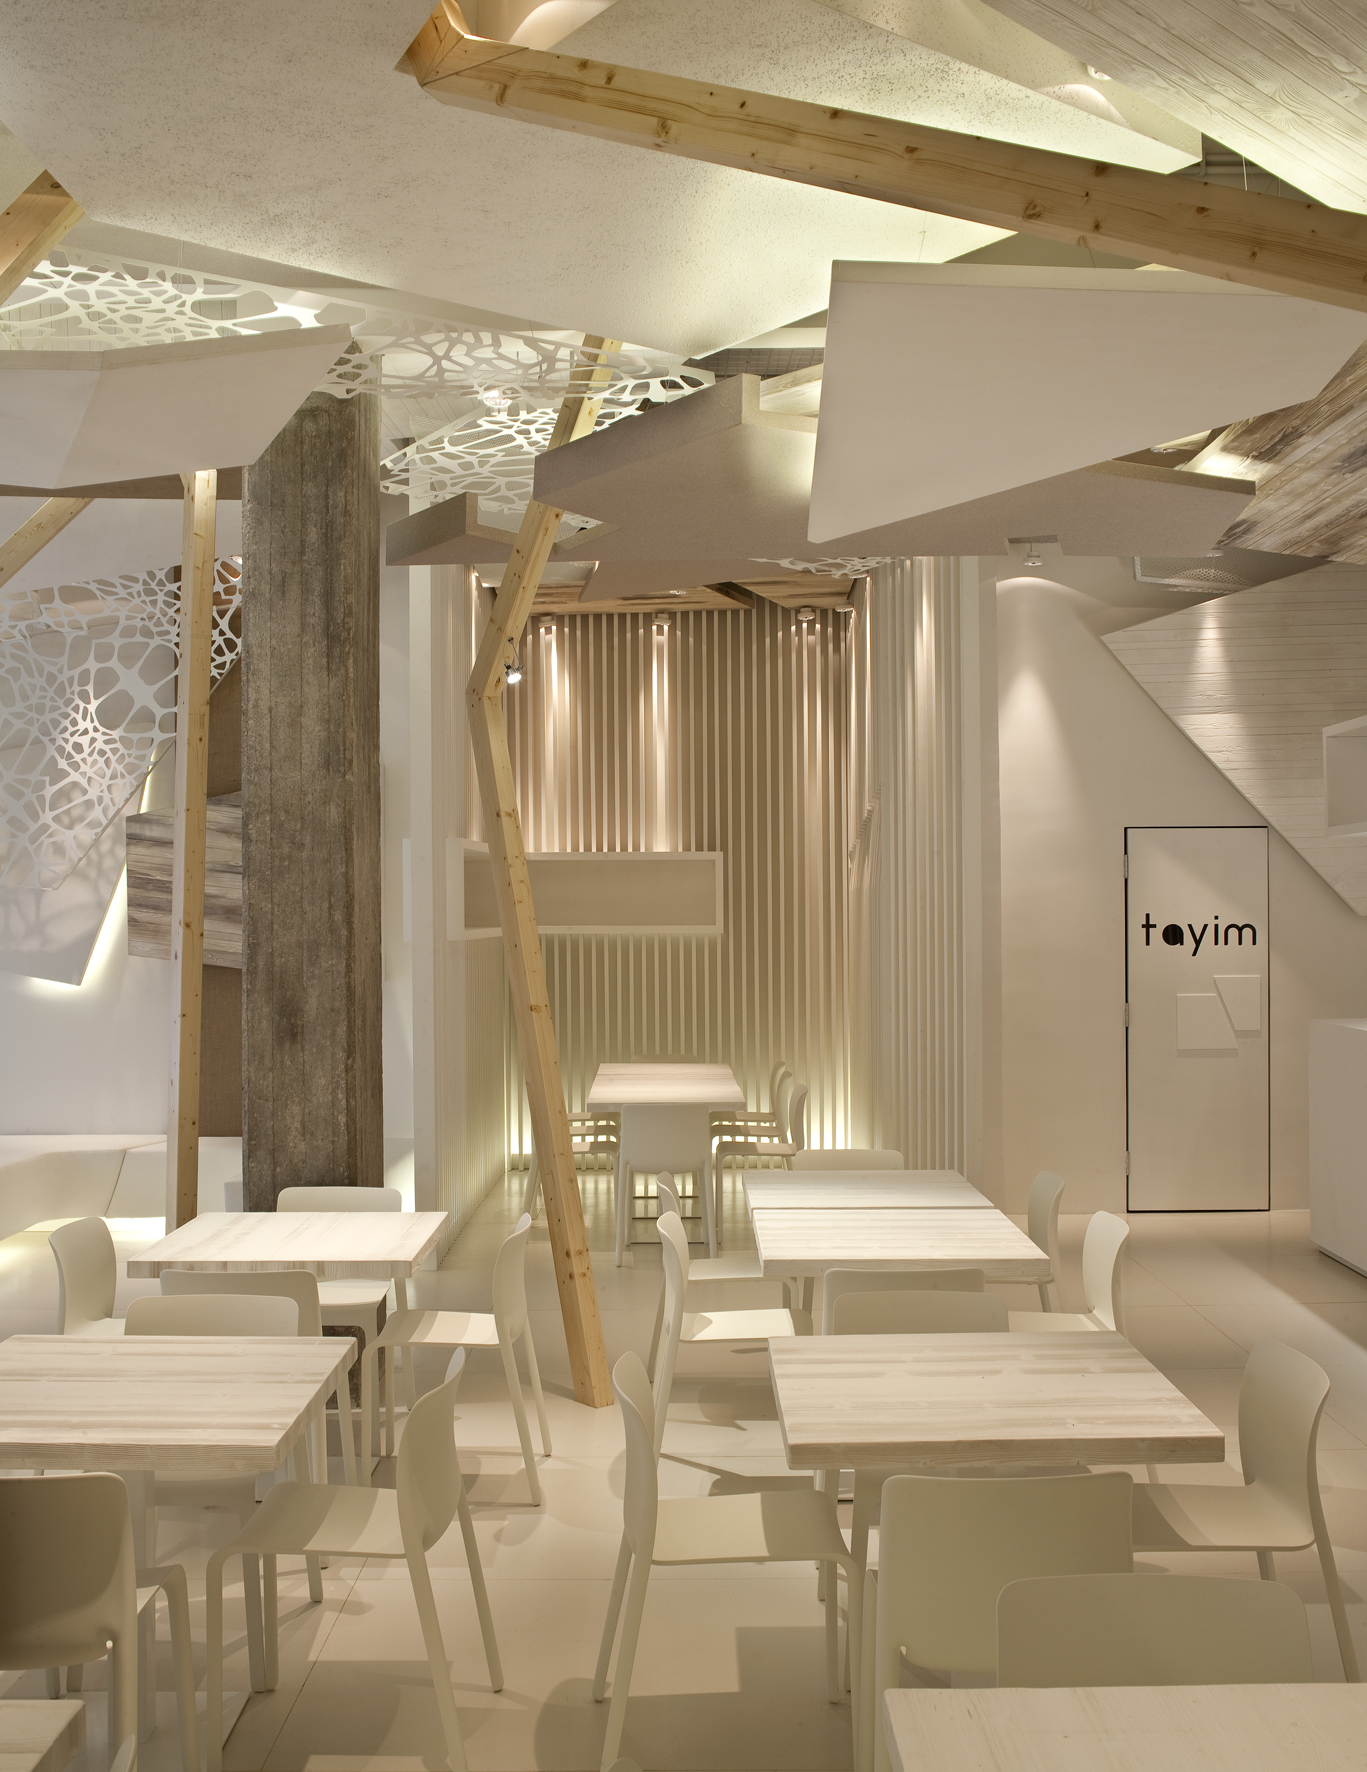 custom-made interiors in wood for restaurants